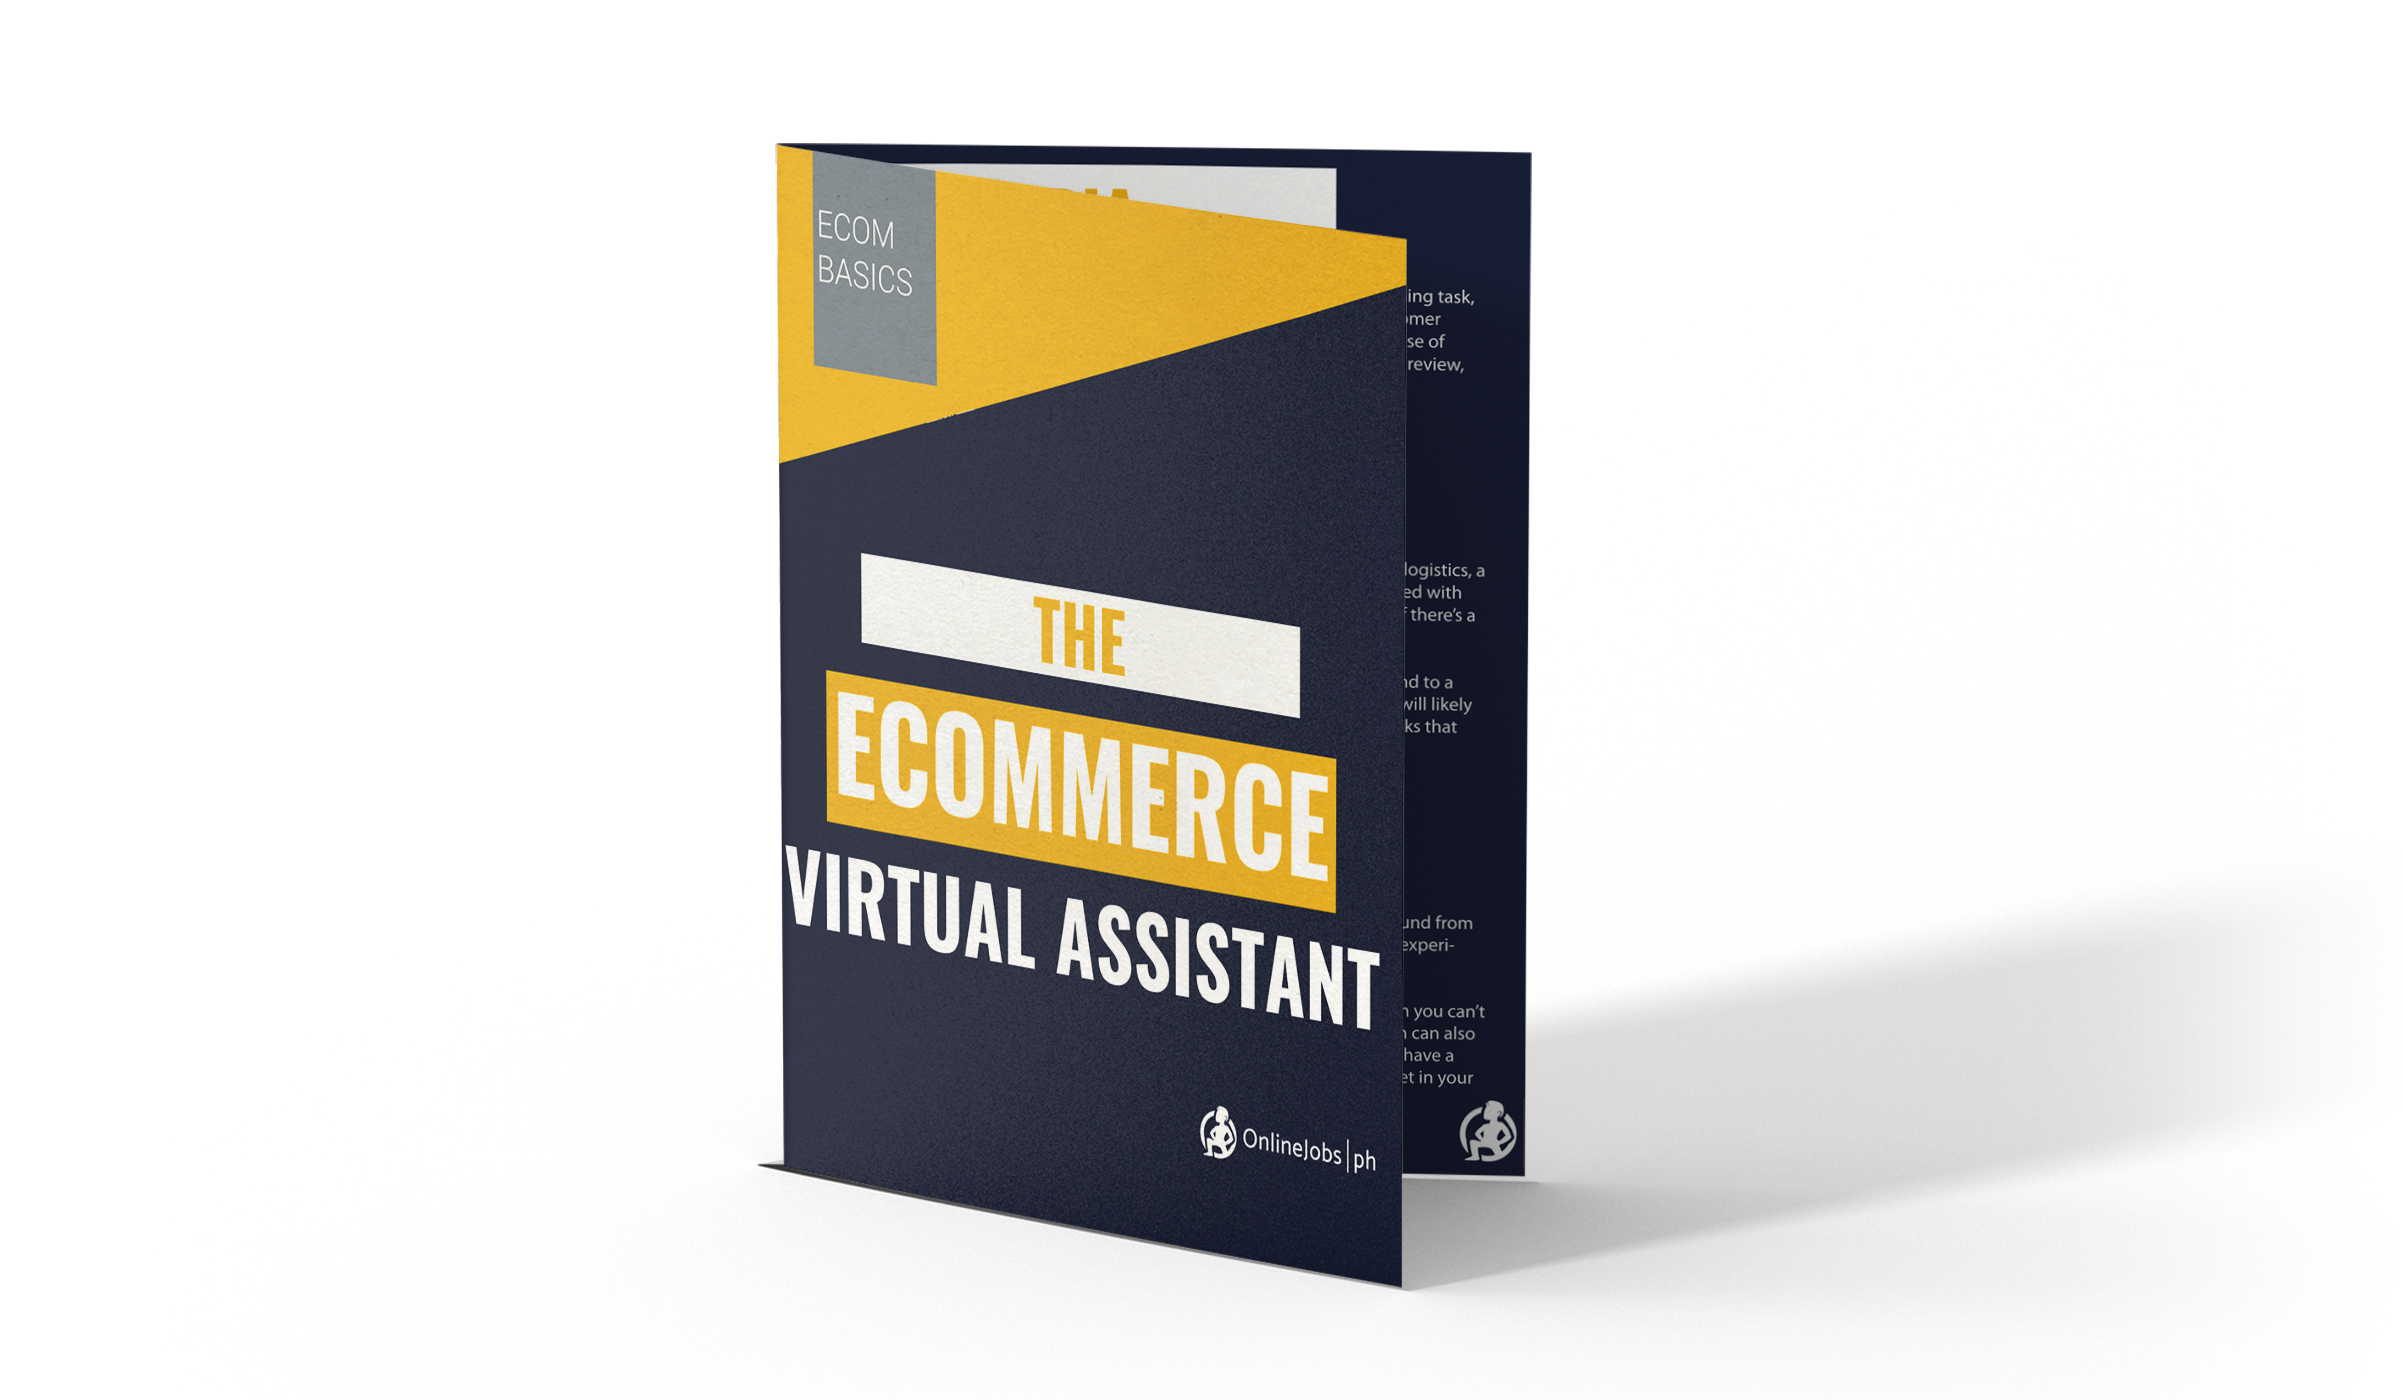 https://www.onlinejobs.ph/blog/wp-content/uploads/2017/11/OJ-Collaborative-Training-Ecom-Virtual-Assistant.pdf